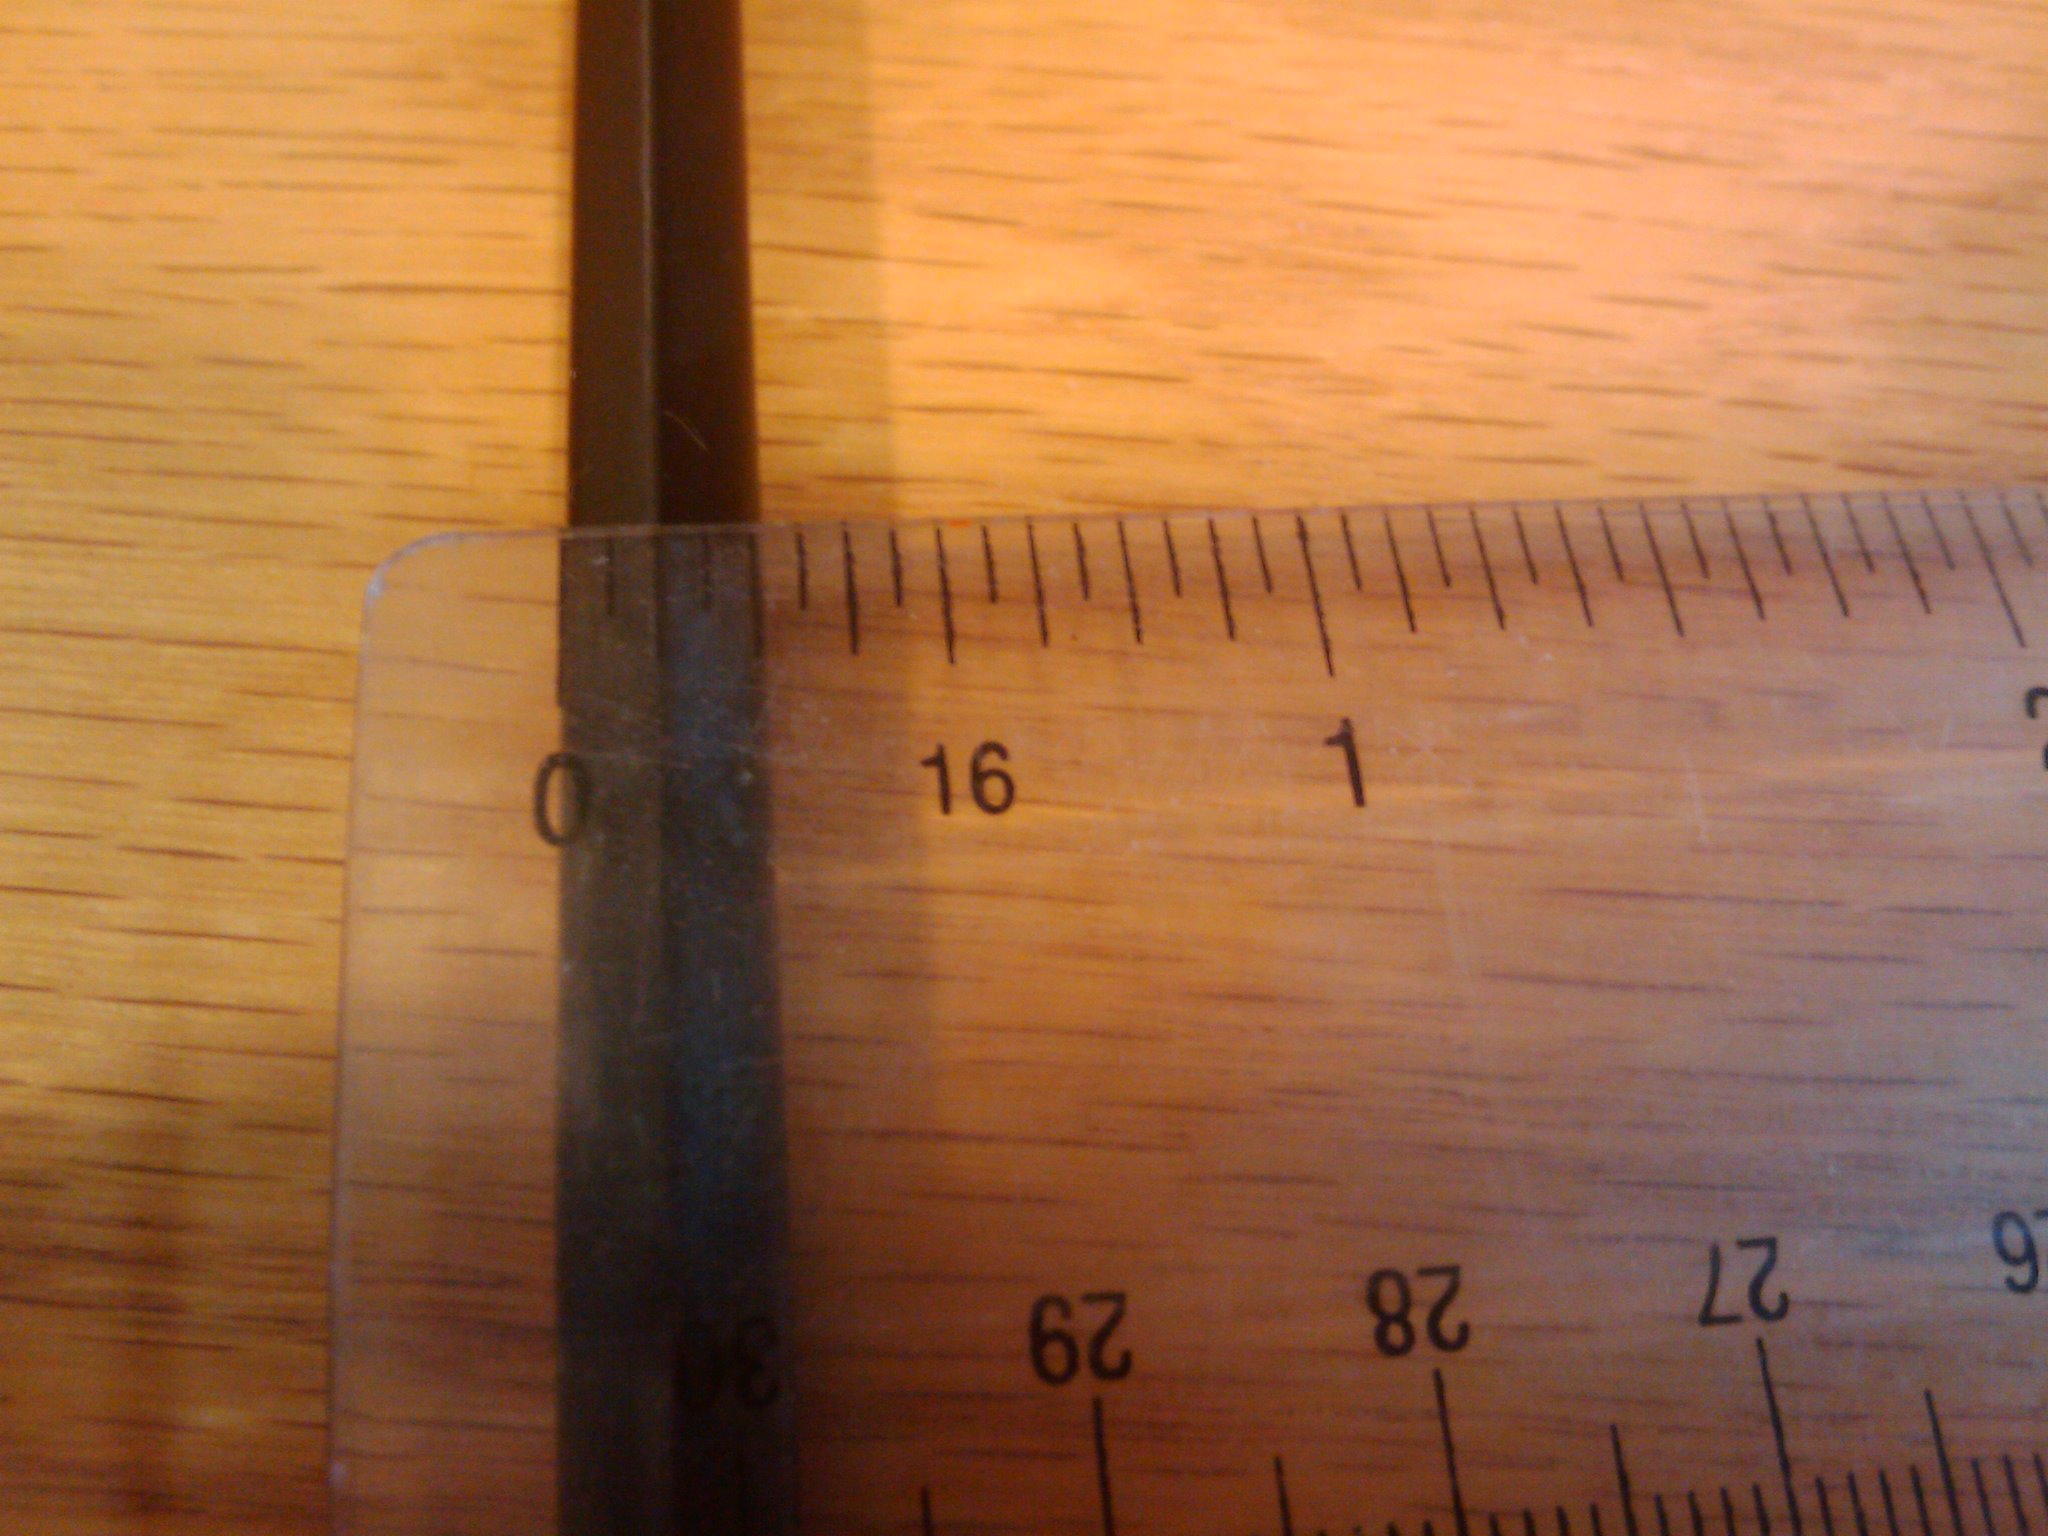 File:Measuring-tape.jpg - Wikipedia